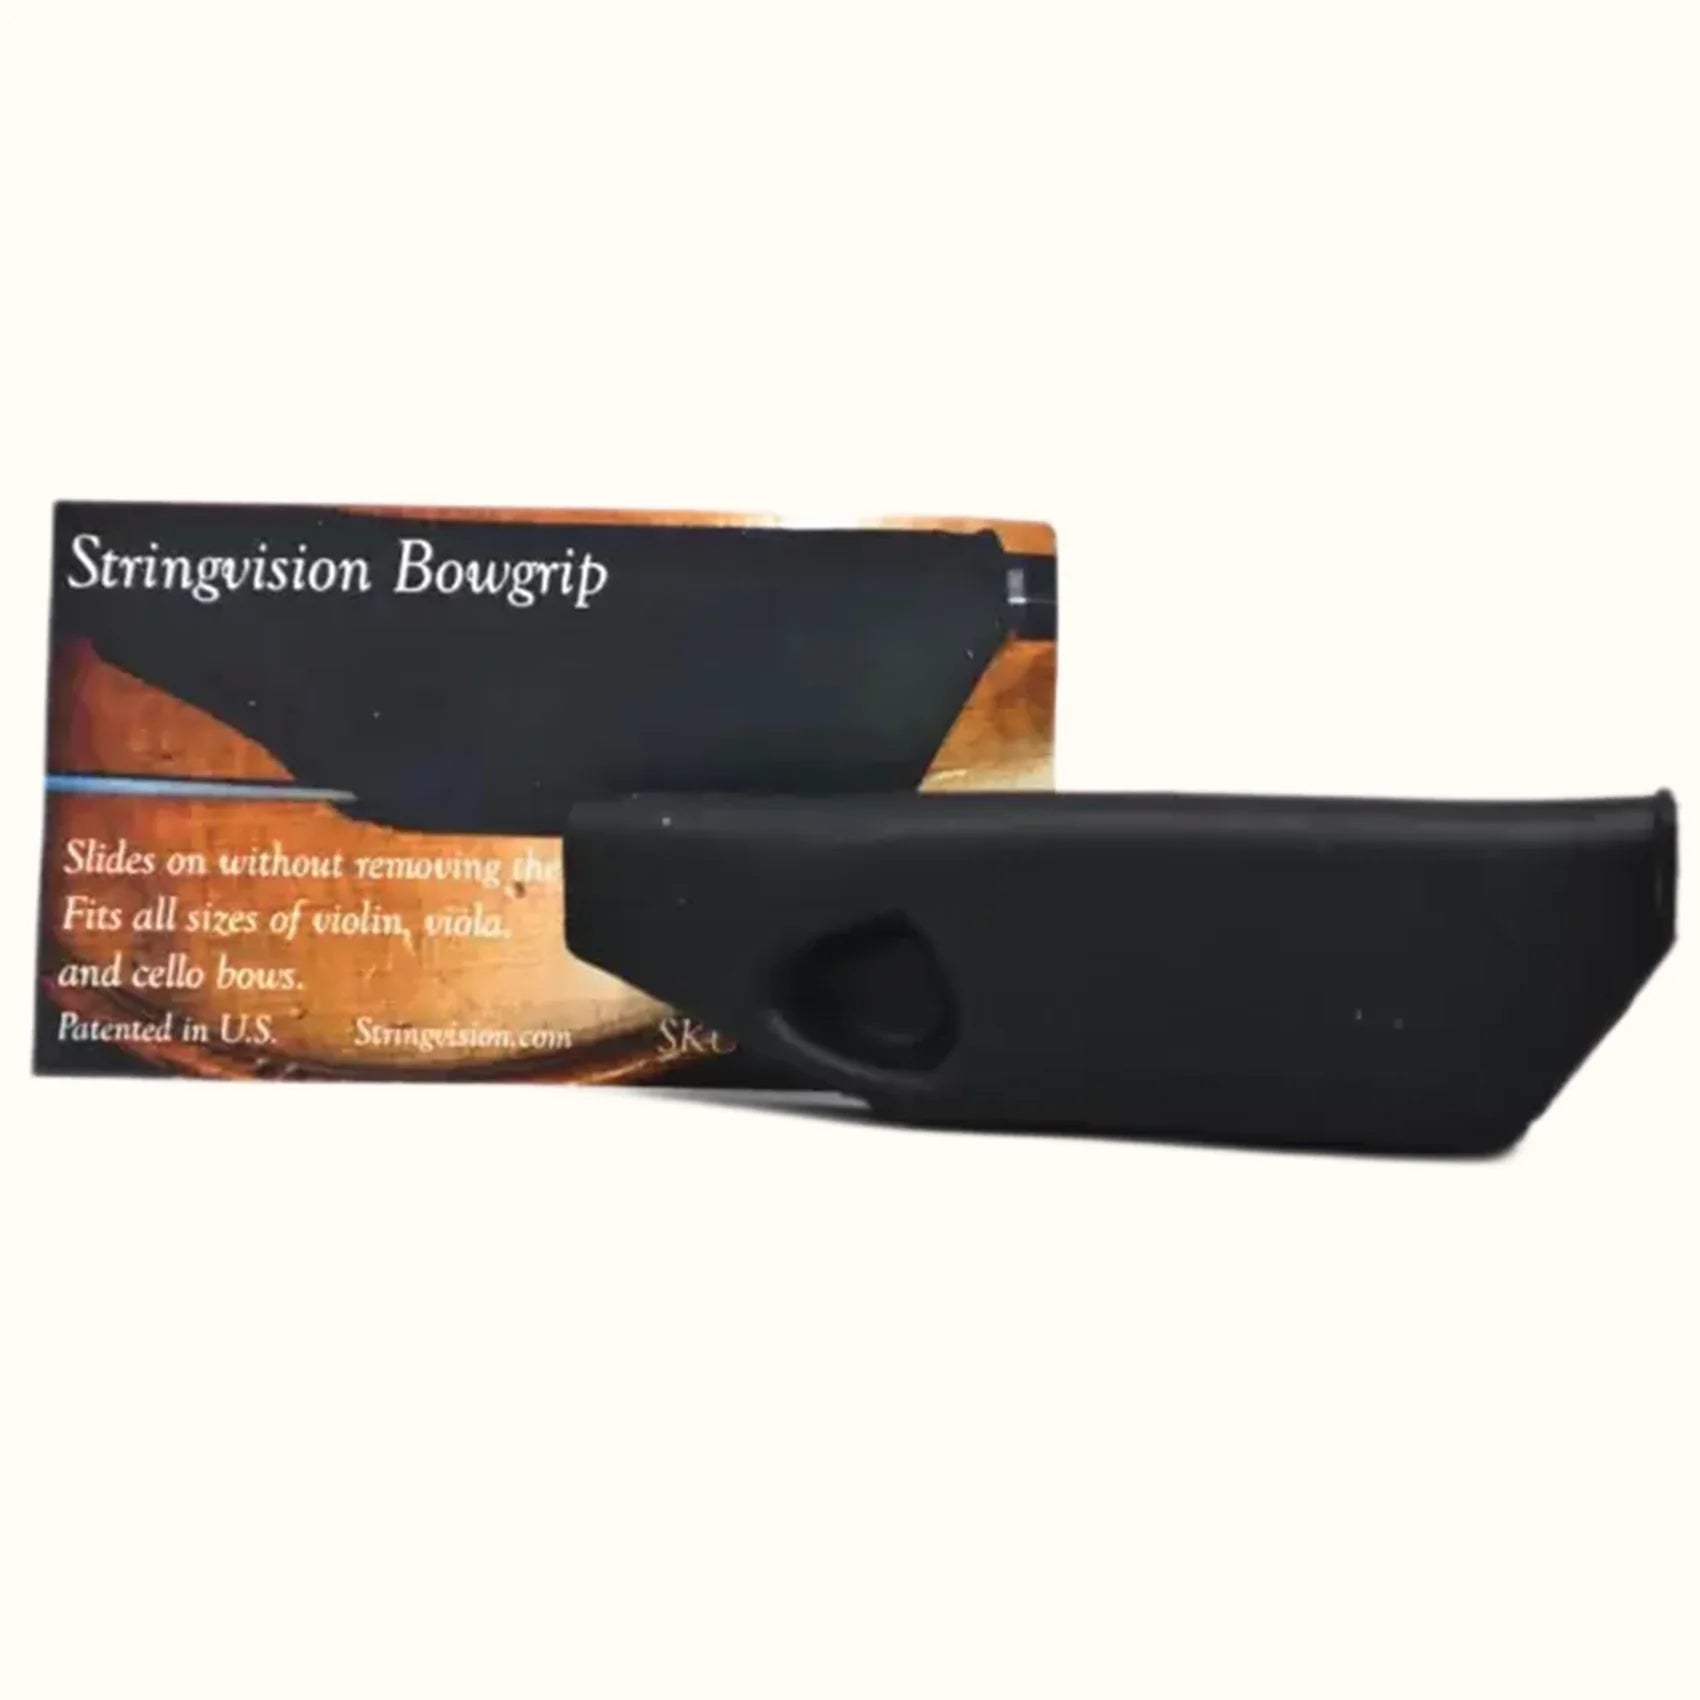 Stringvision - Bowgrip